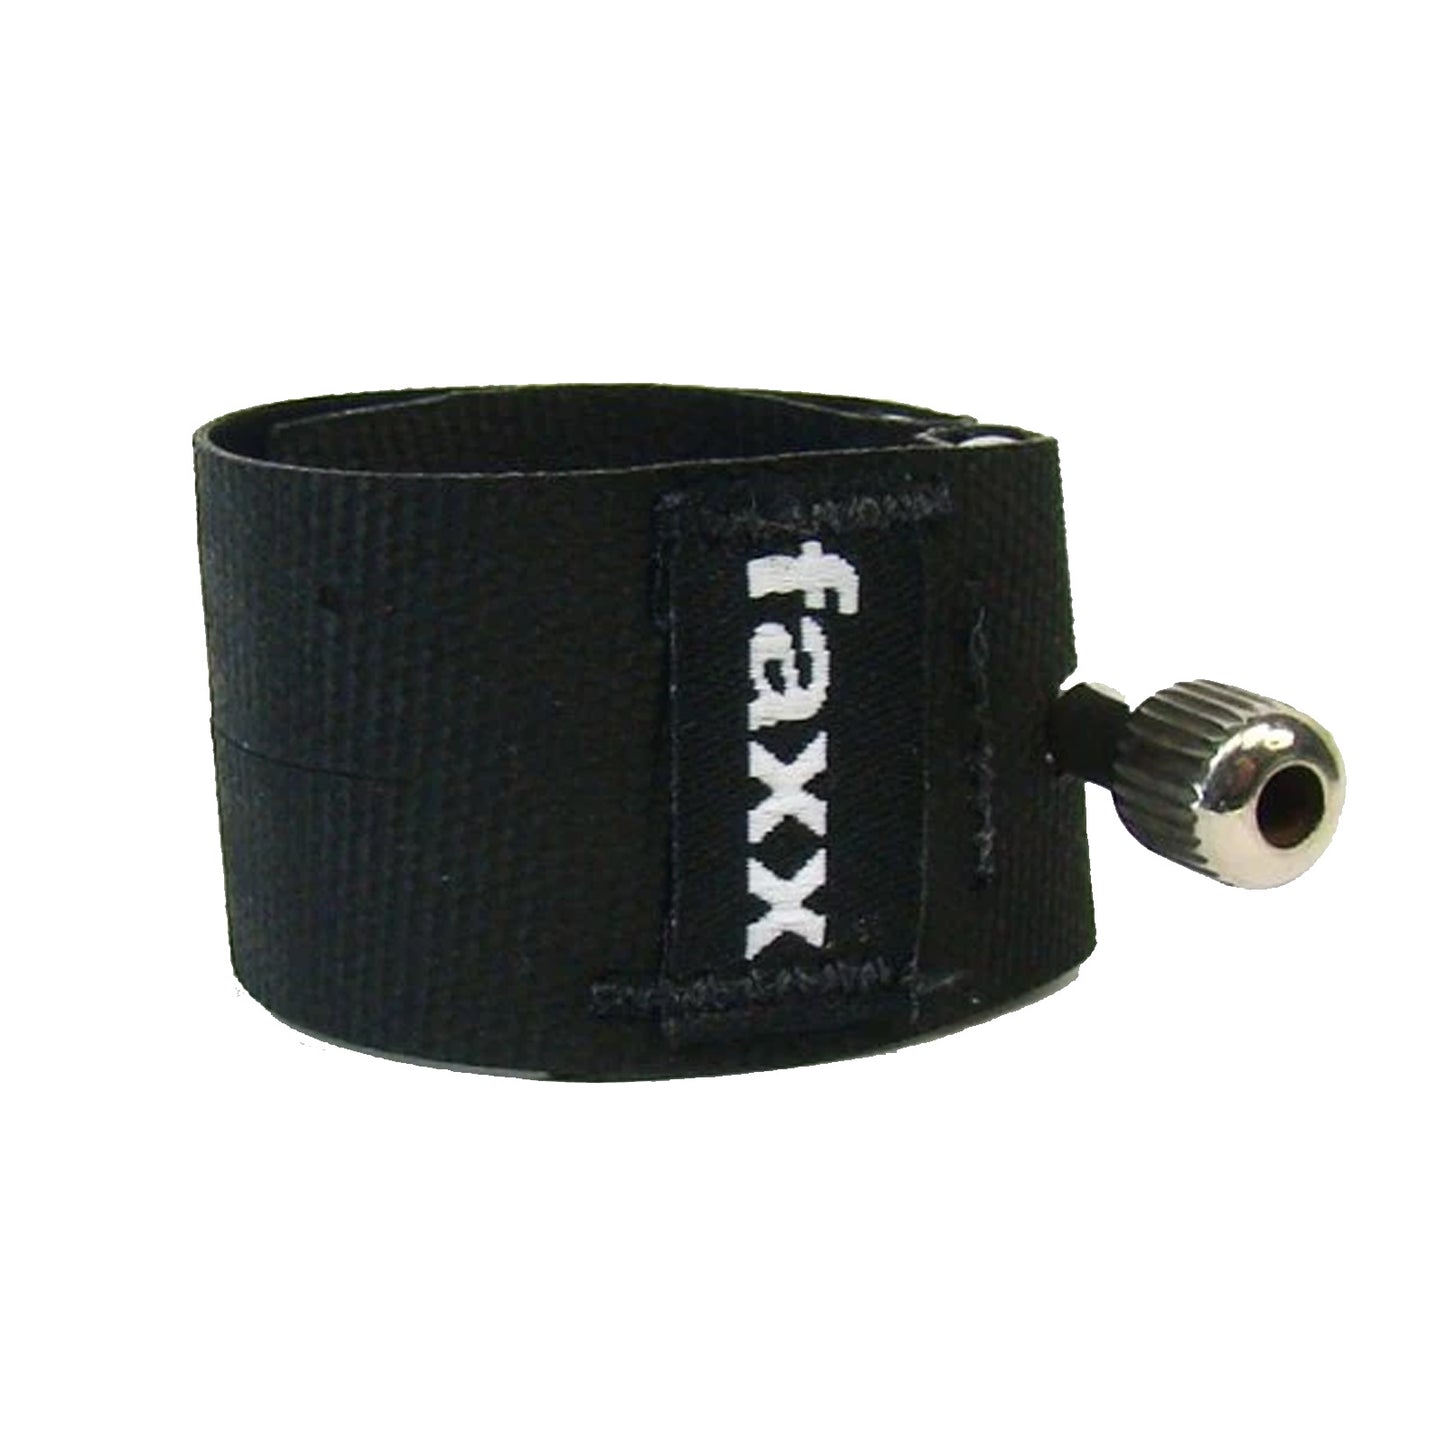 Faxx Clarinet Ligature (Strap Style)